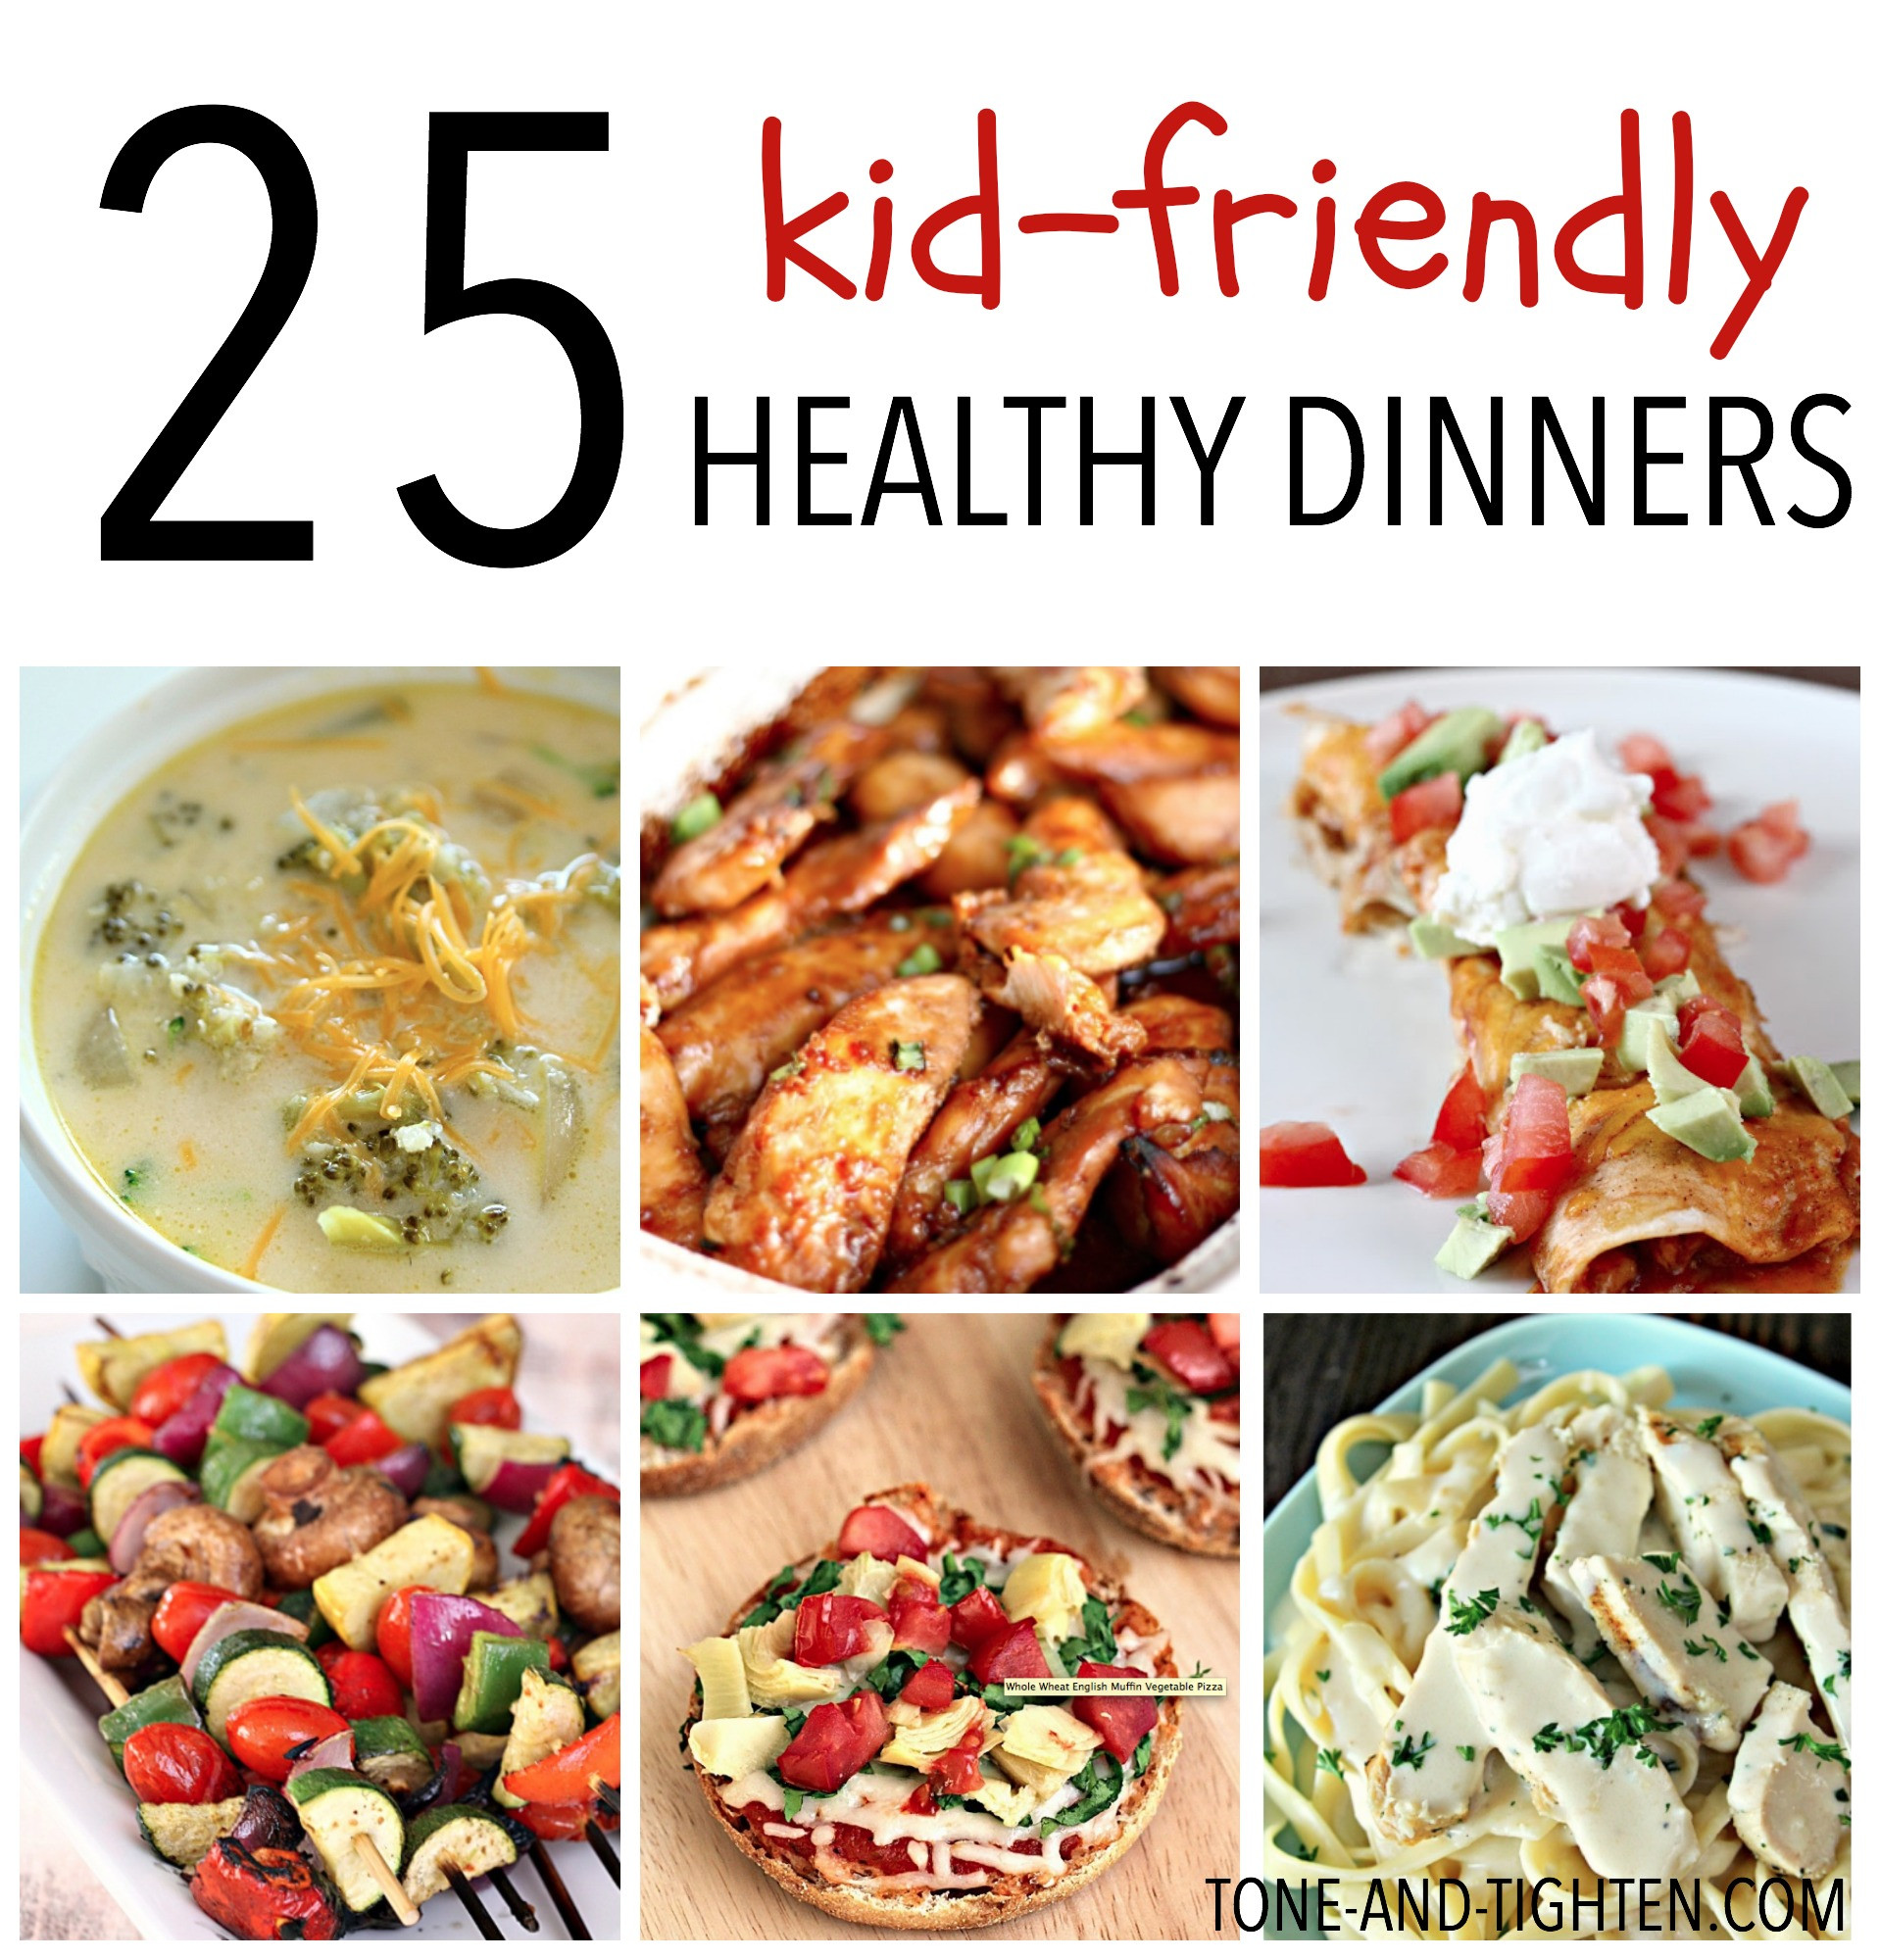 Healthy Dinner Ideas For Kids
 25 Kid Friendly Healthy Dinners